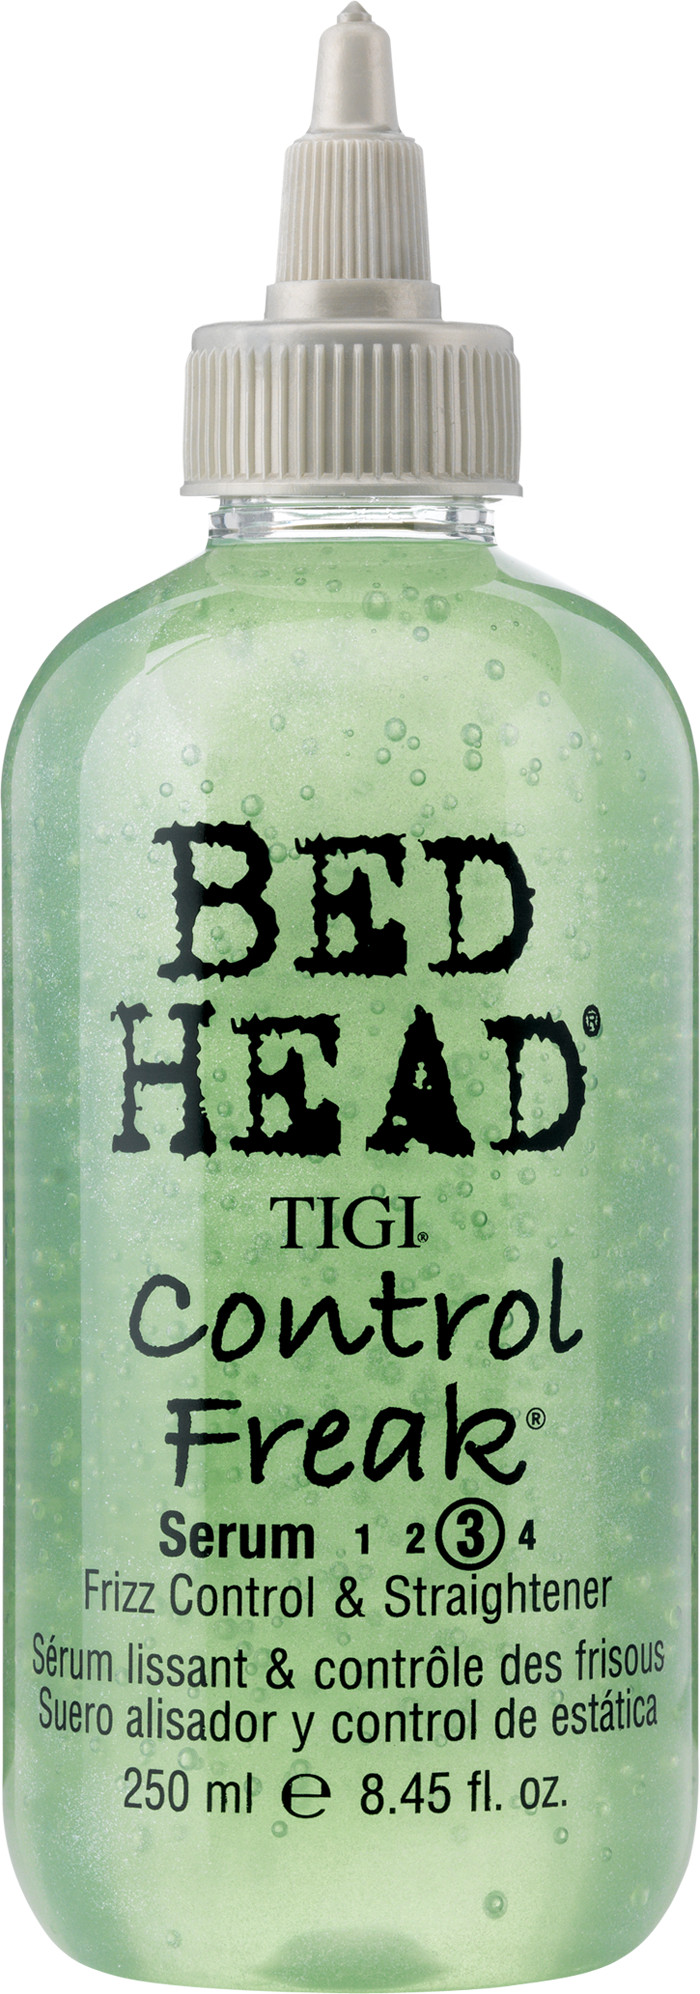 tigi bed head control freak serum